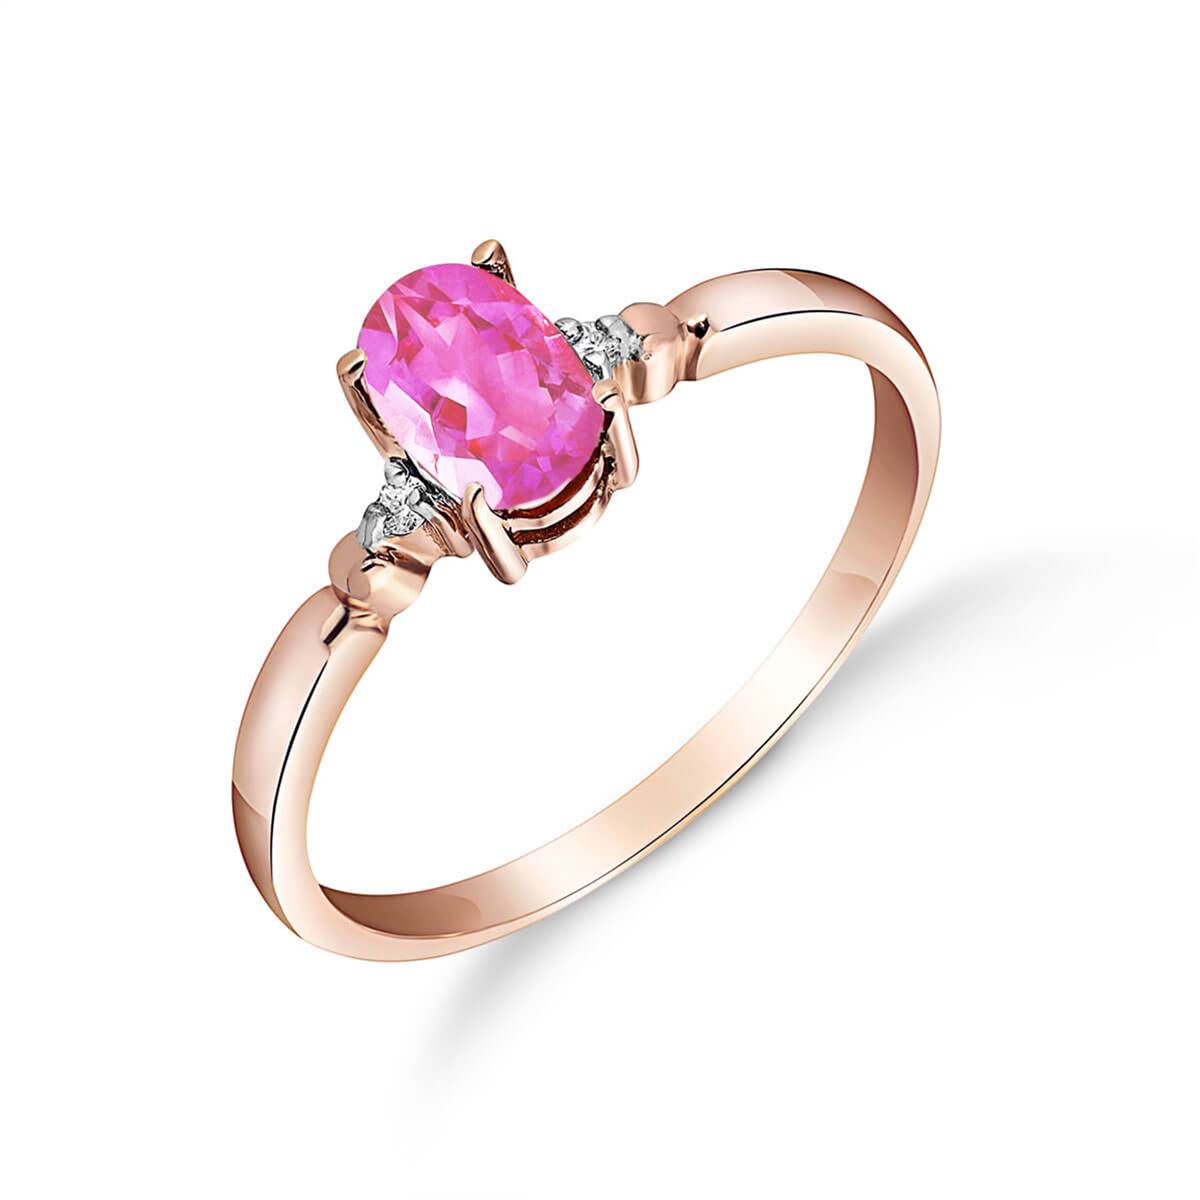 0.46 Carat 14K Solid Rose Gold Ring Natural Diamond Pink Topaz